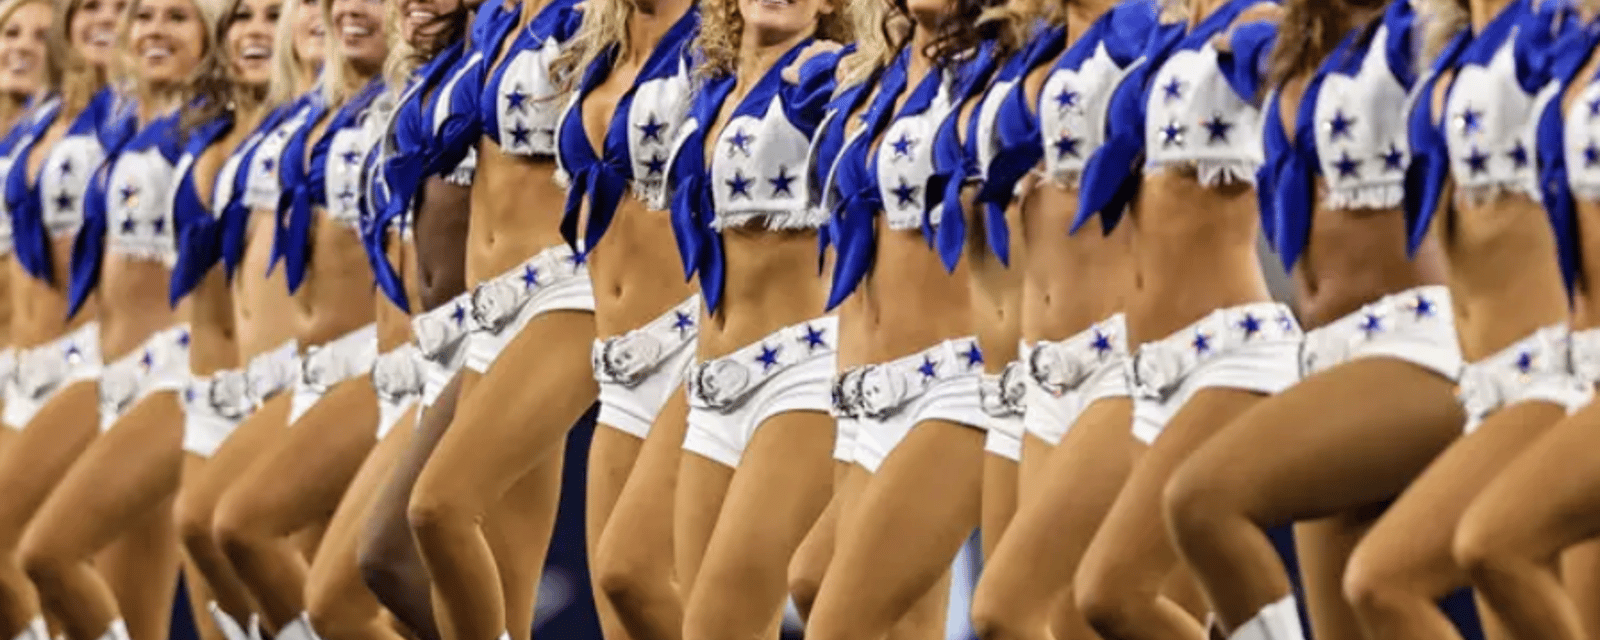 Cowboys cheerleaders make shocking claims against Packers 